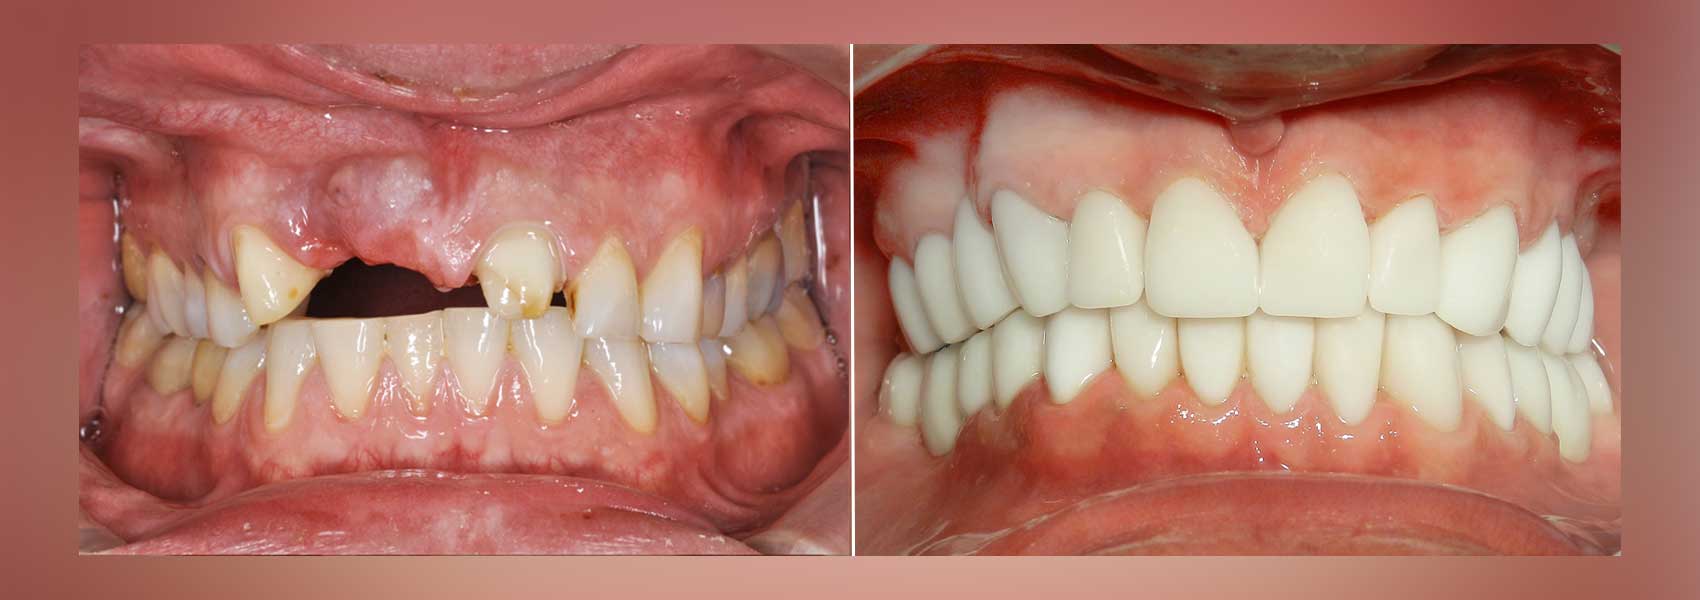 Full mouth restoration